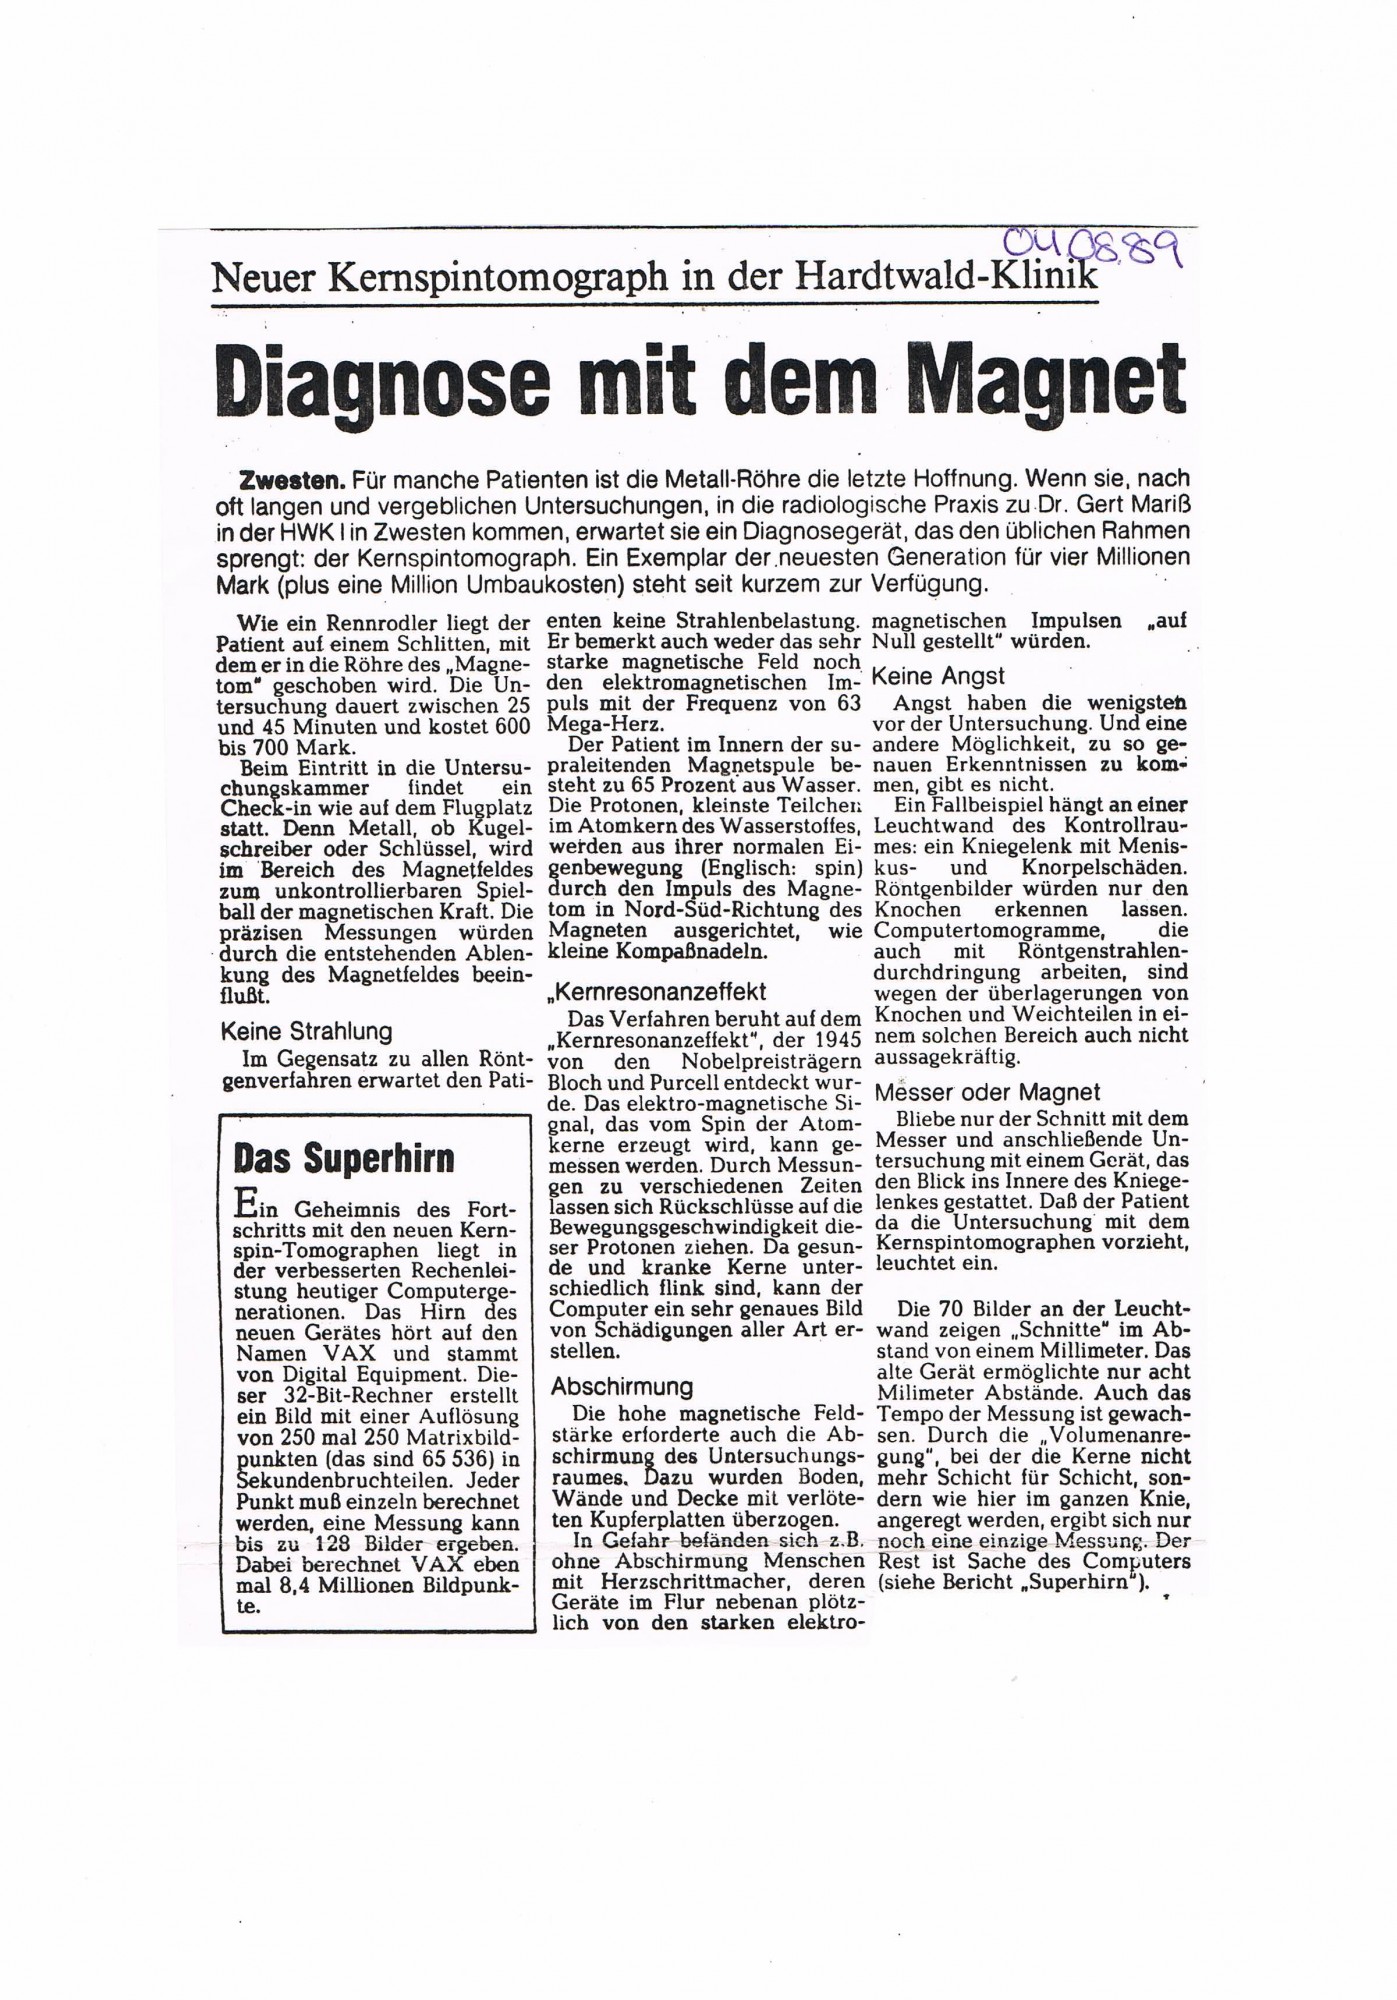 1989-08-04 Diagnose mit dem Magnet-001